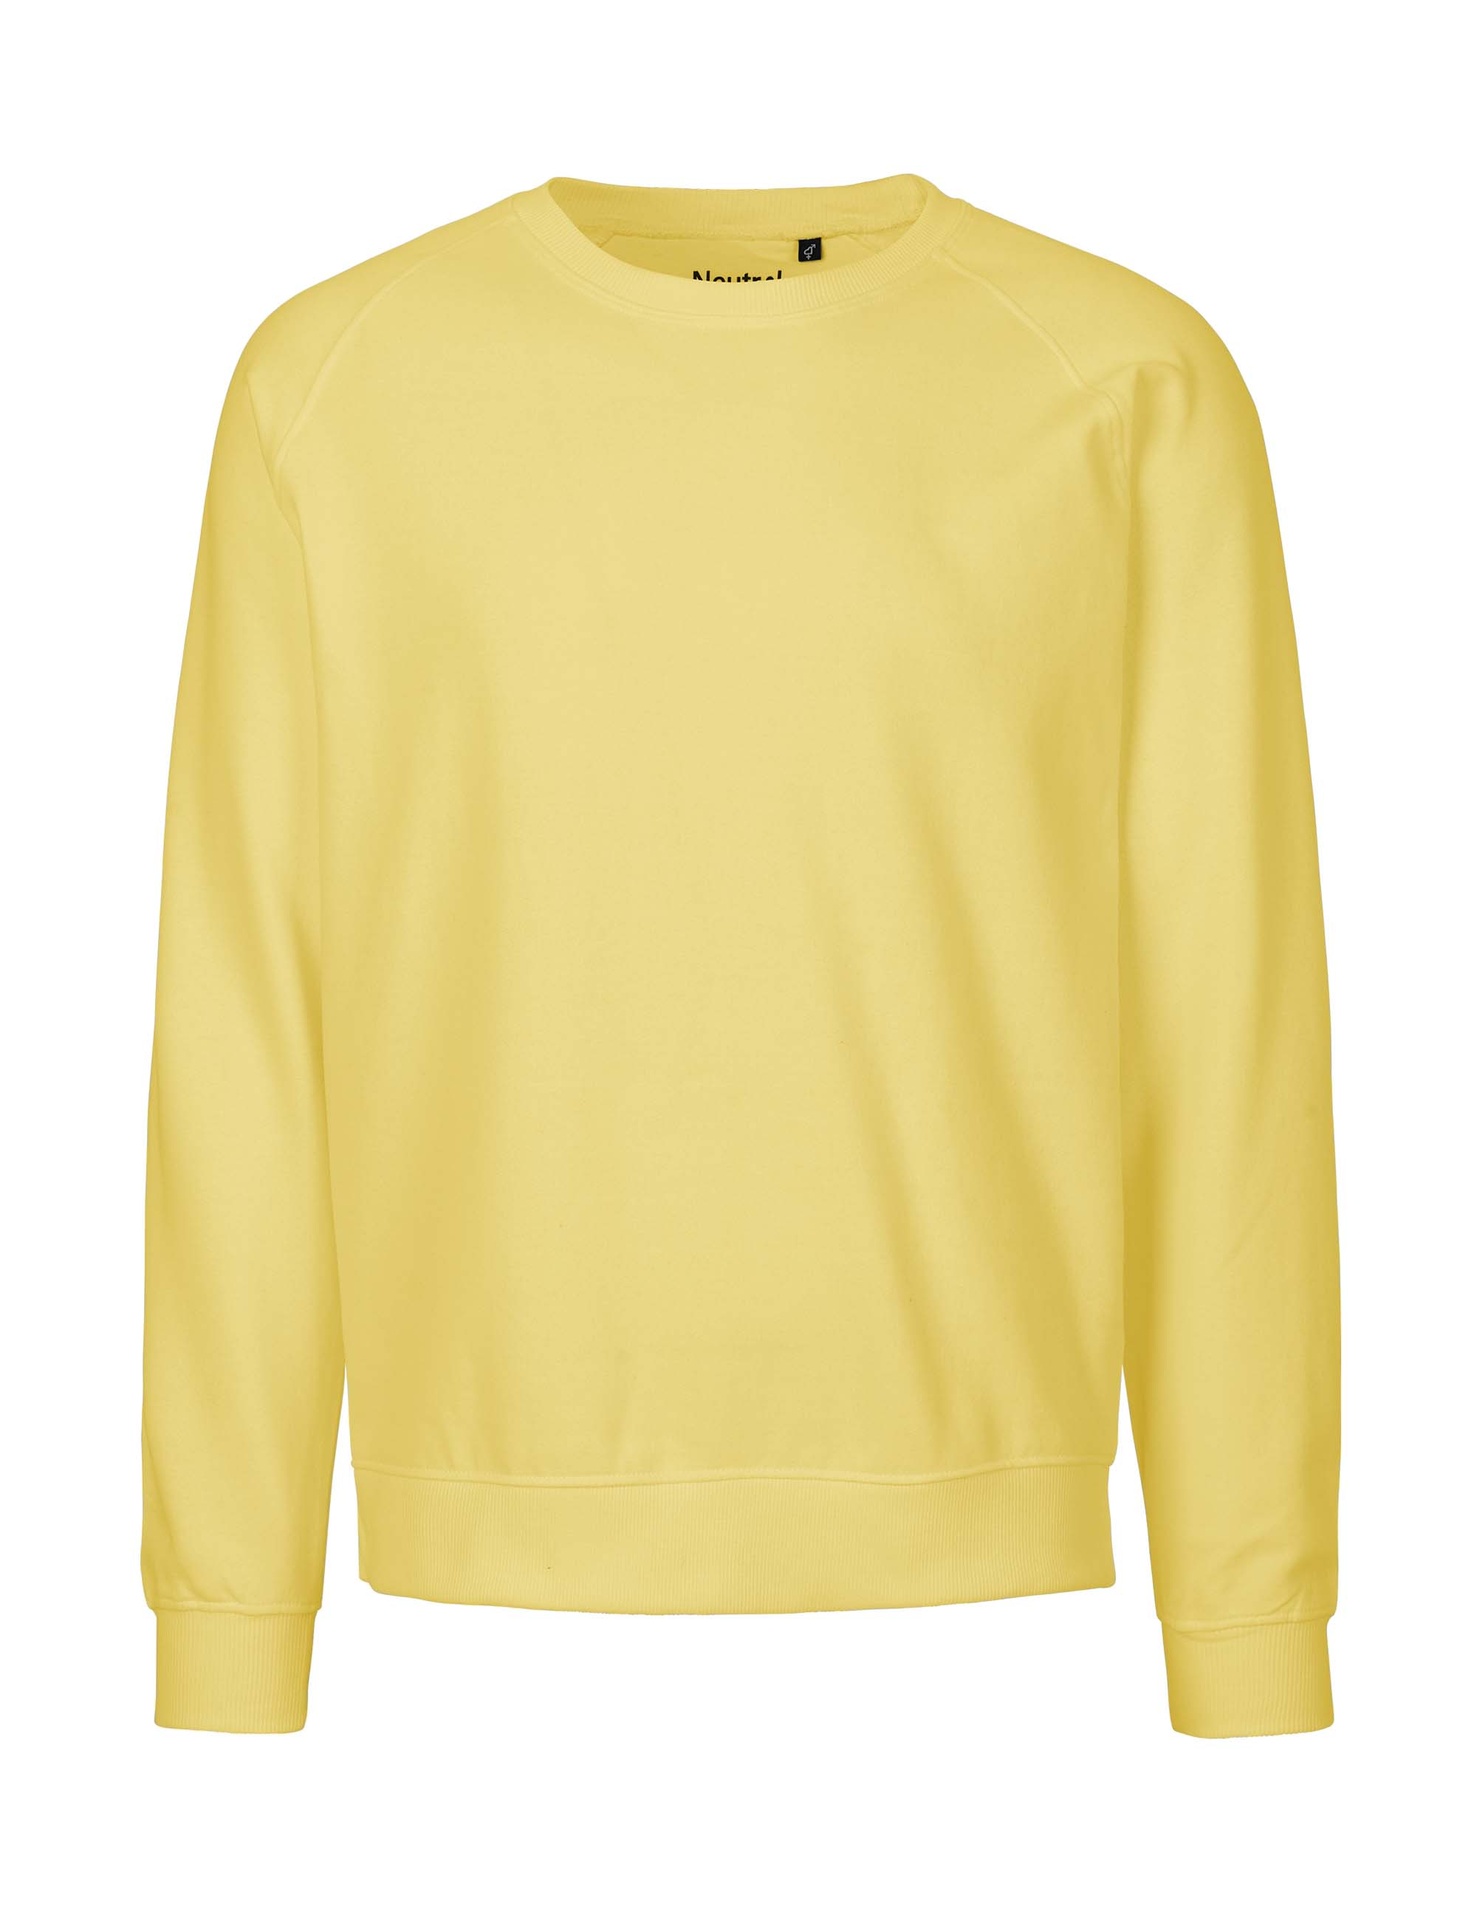 [PR/02852] Unisex Sweatshirt (Dusty Yellow 43, M)